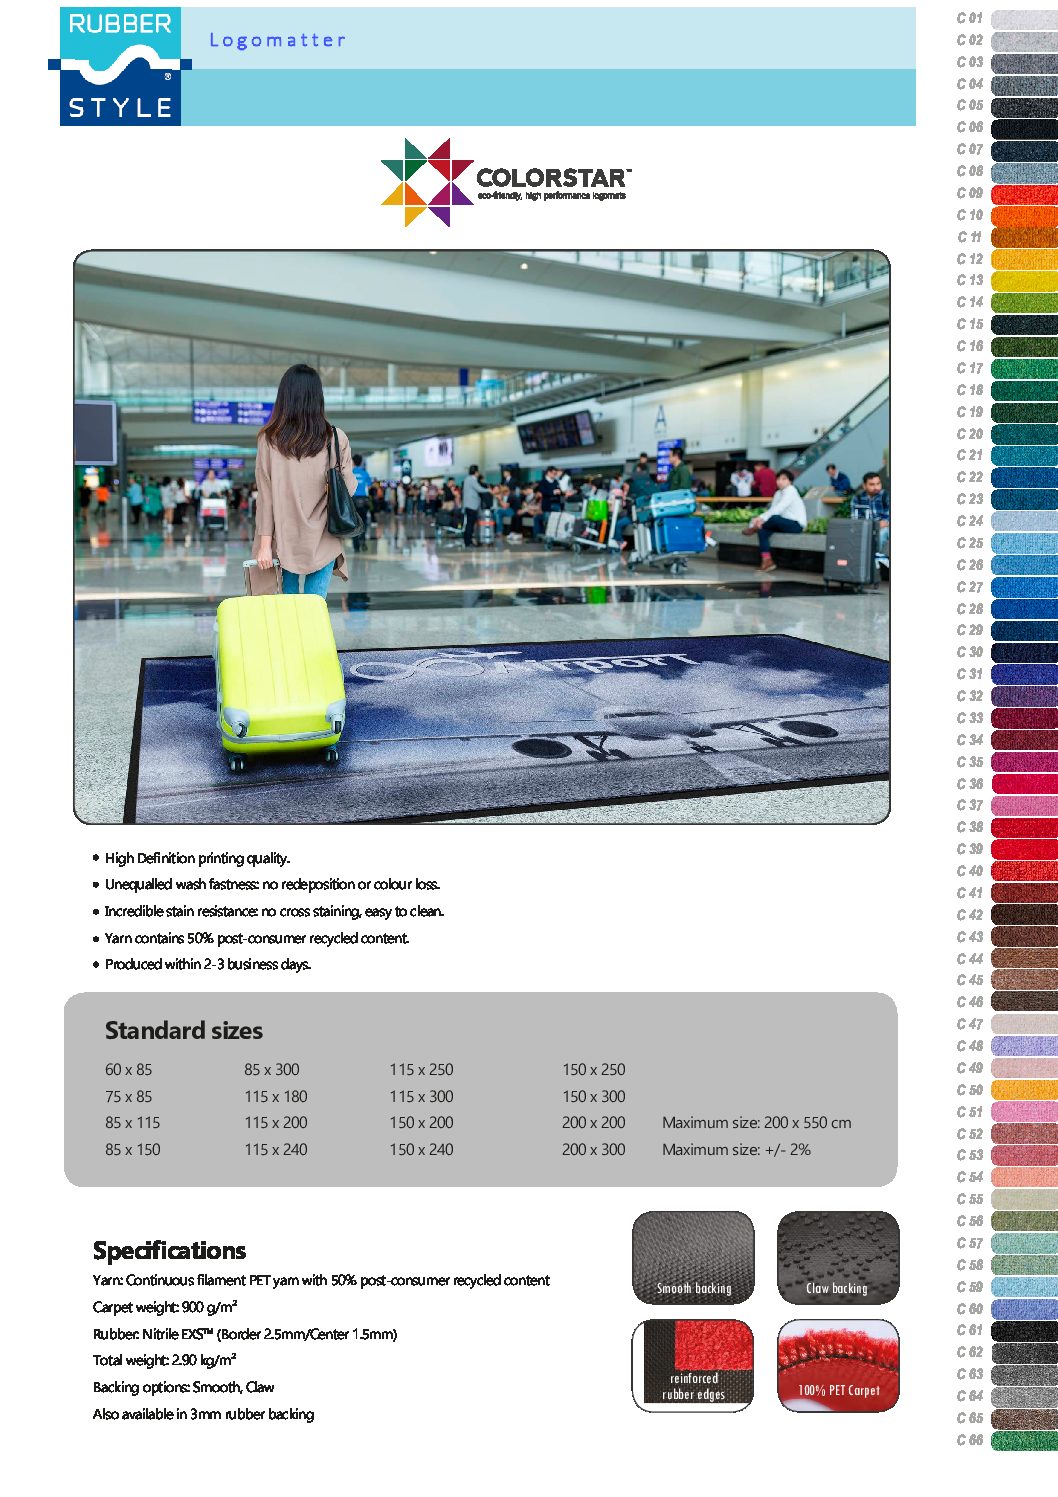 Colorstar med rubberstyle logo pdf